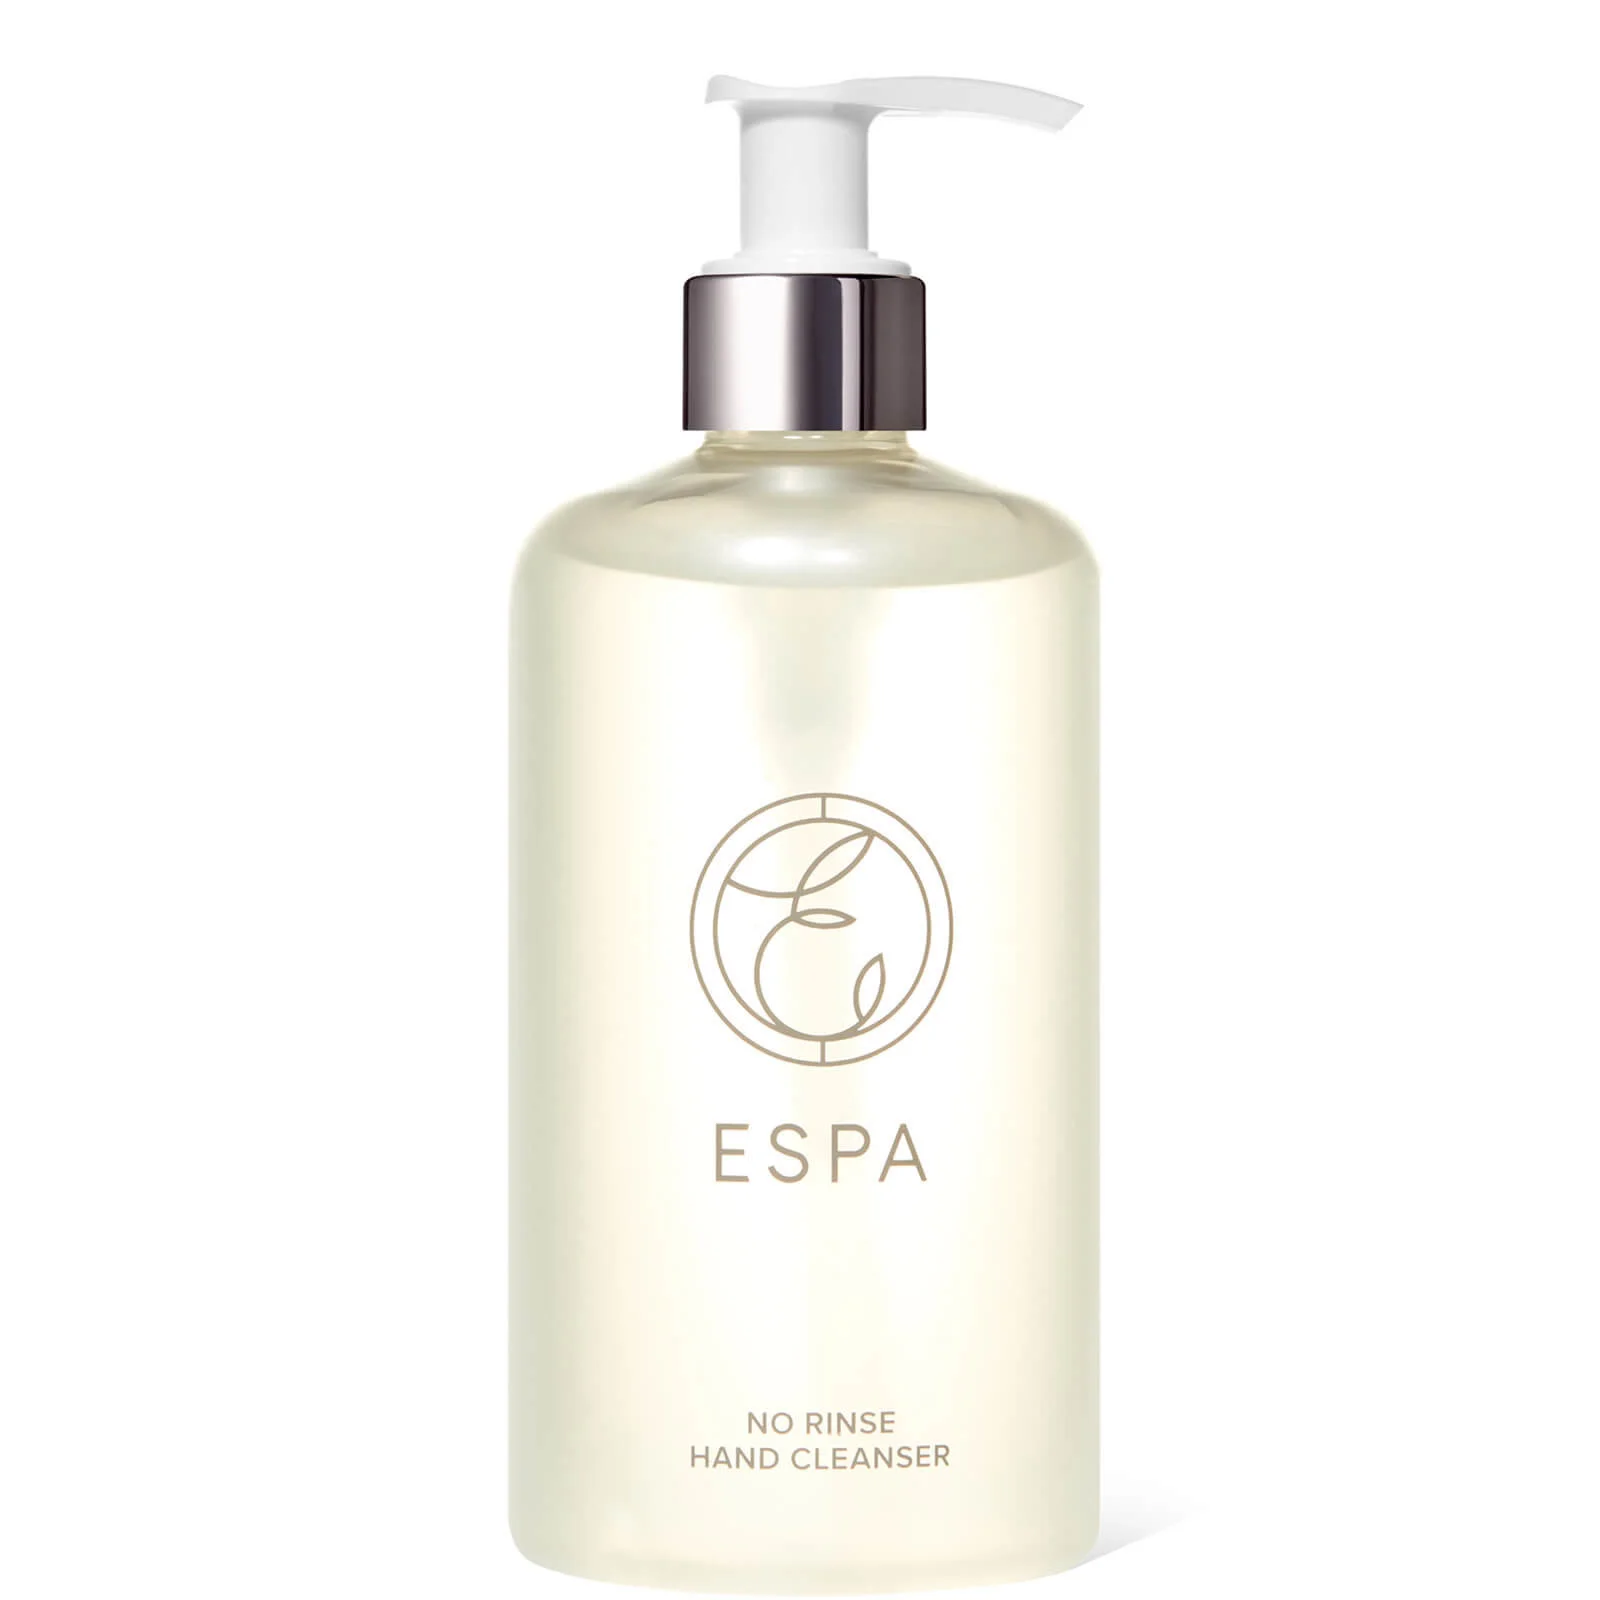 ESPA Essentials No Rinse Hand Cleanser 400ml Plastic Bottle Image 1